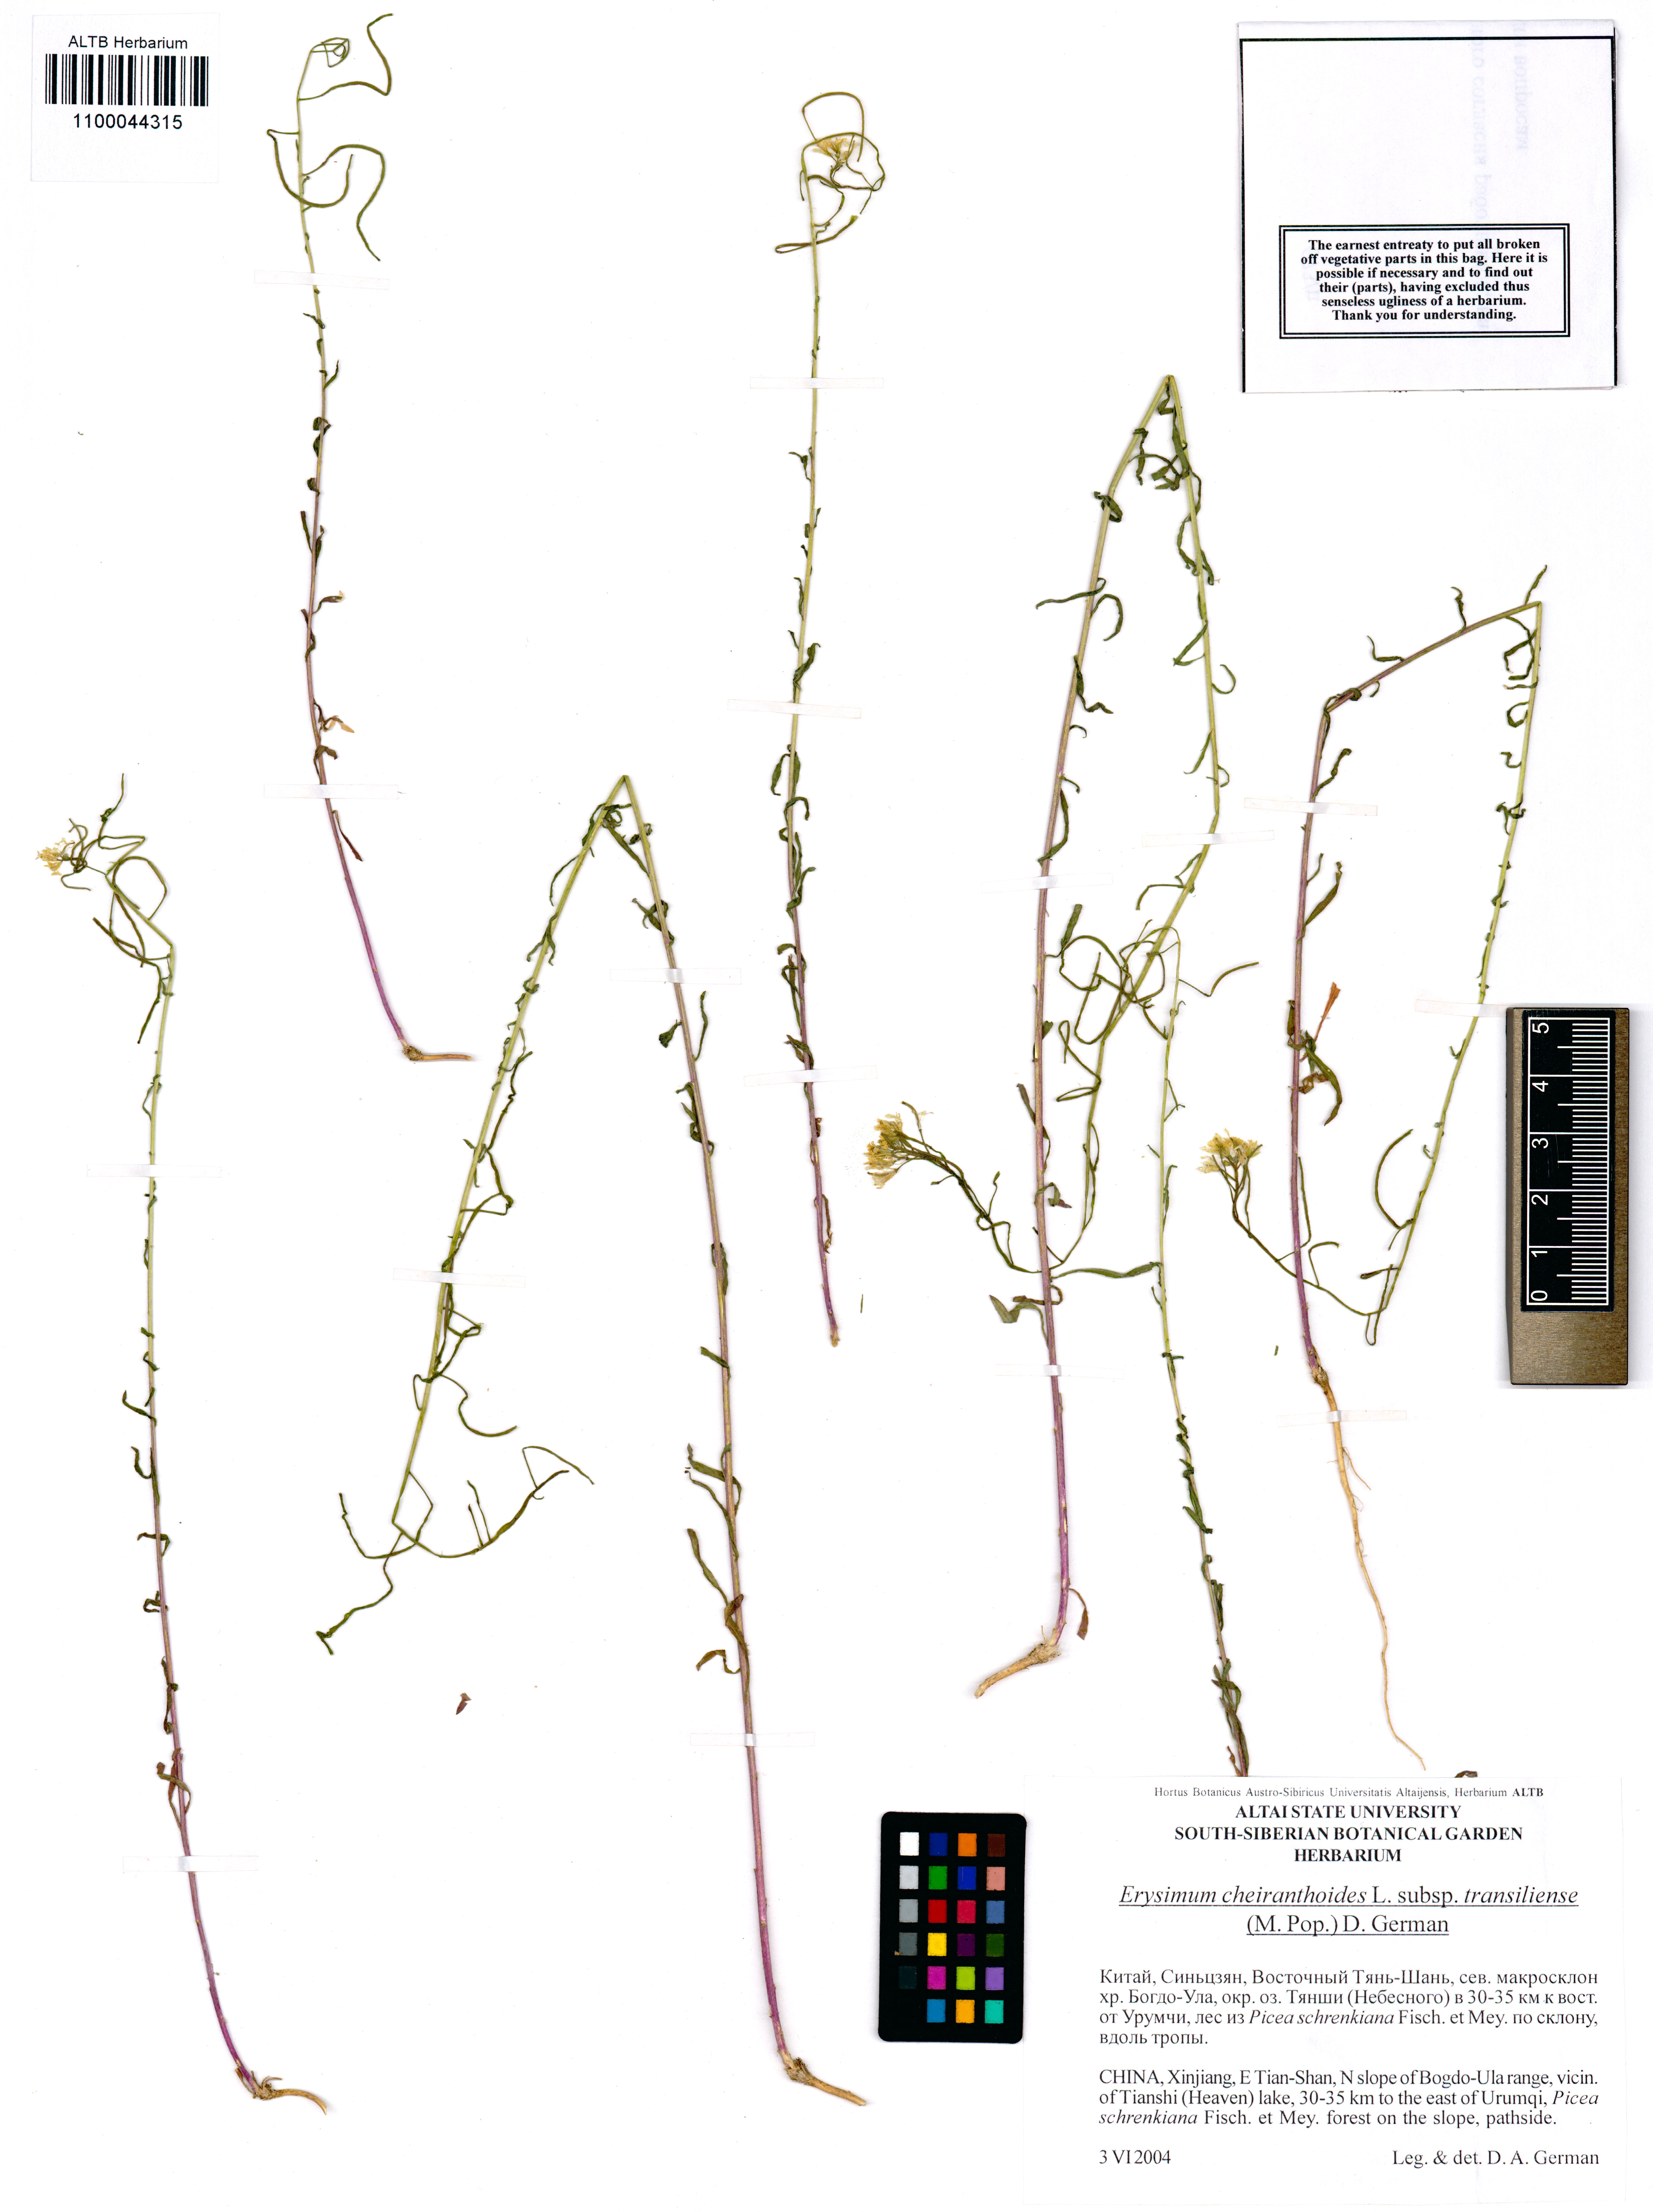 Erysimum cheiranthoides subsp. transiliense (Popov) D.A.German